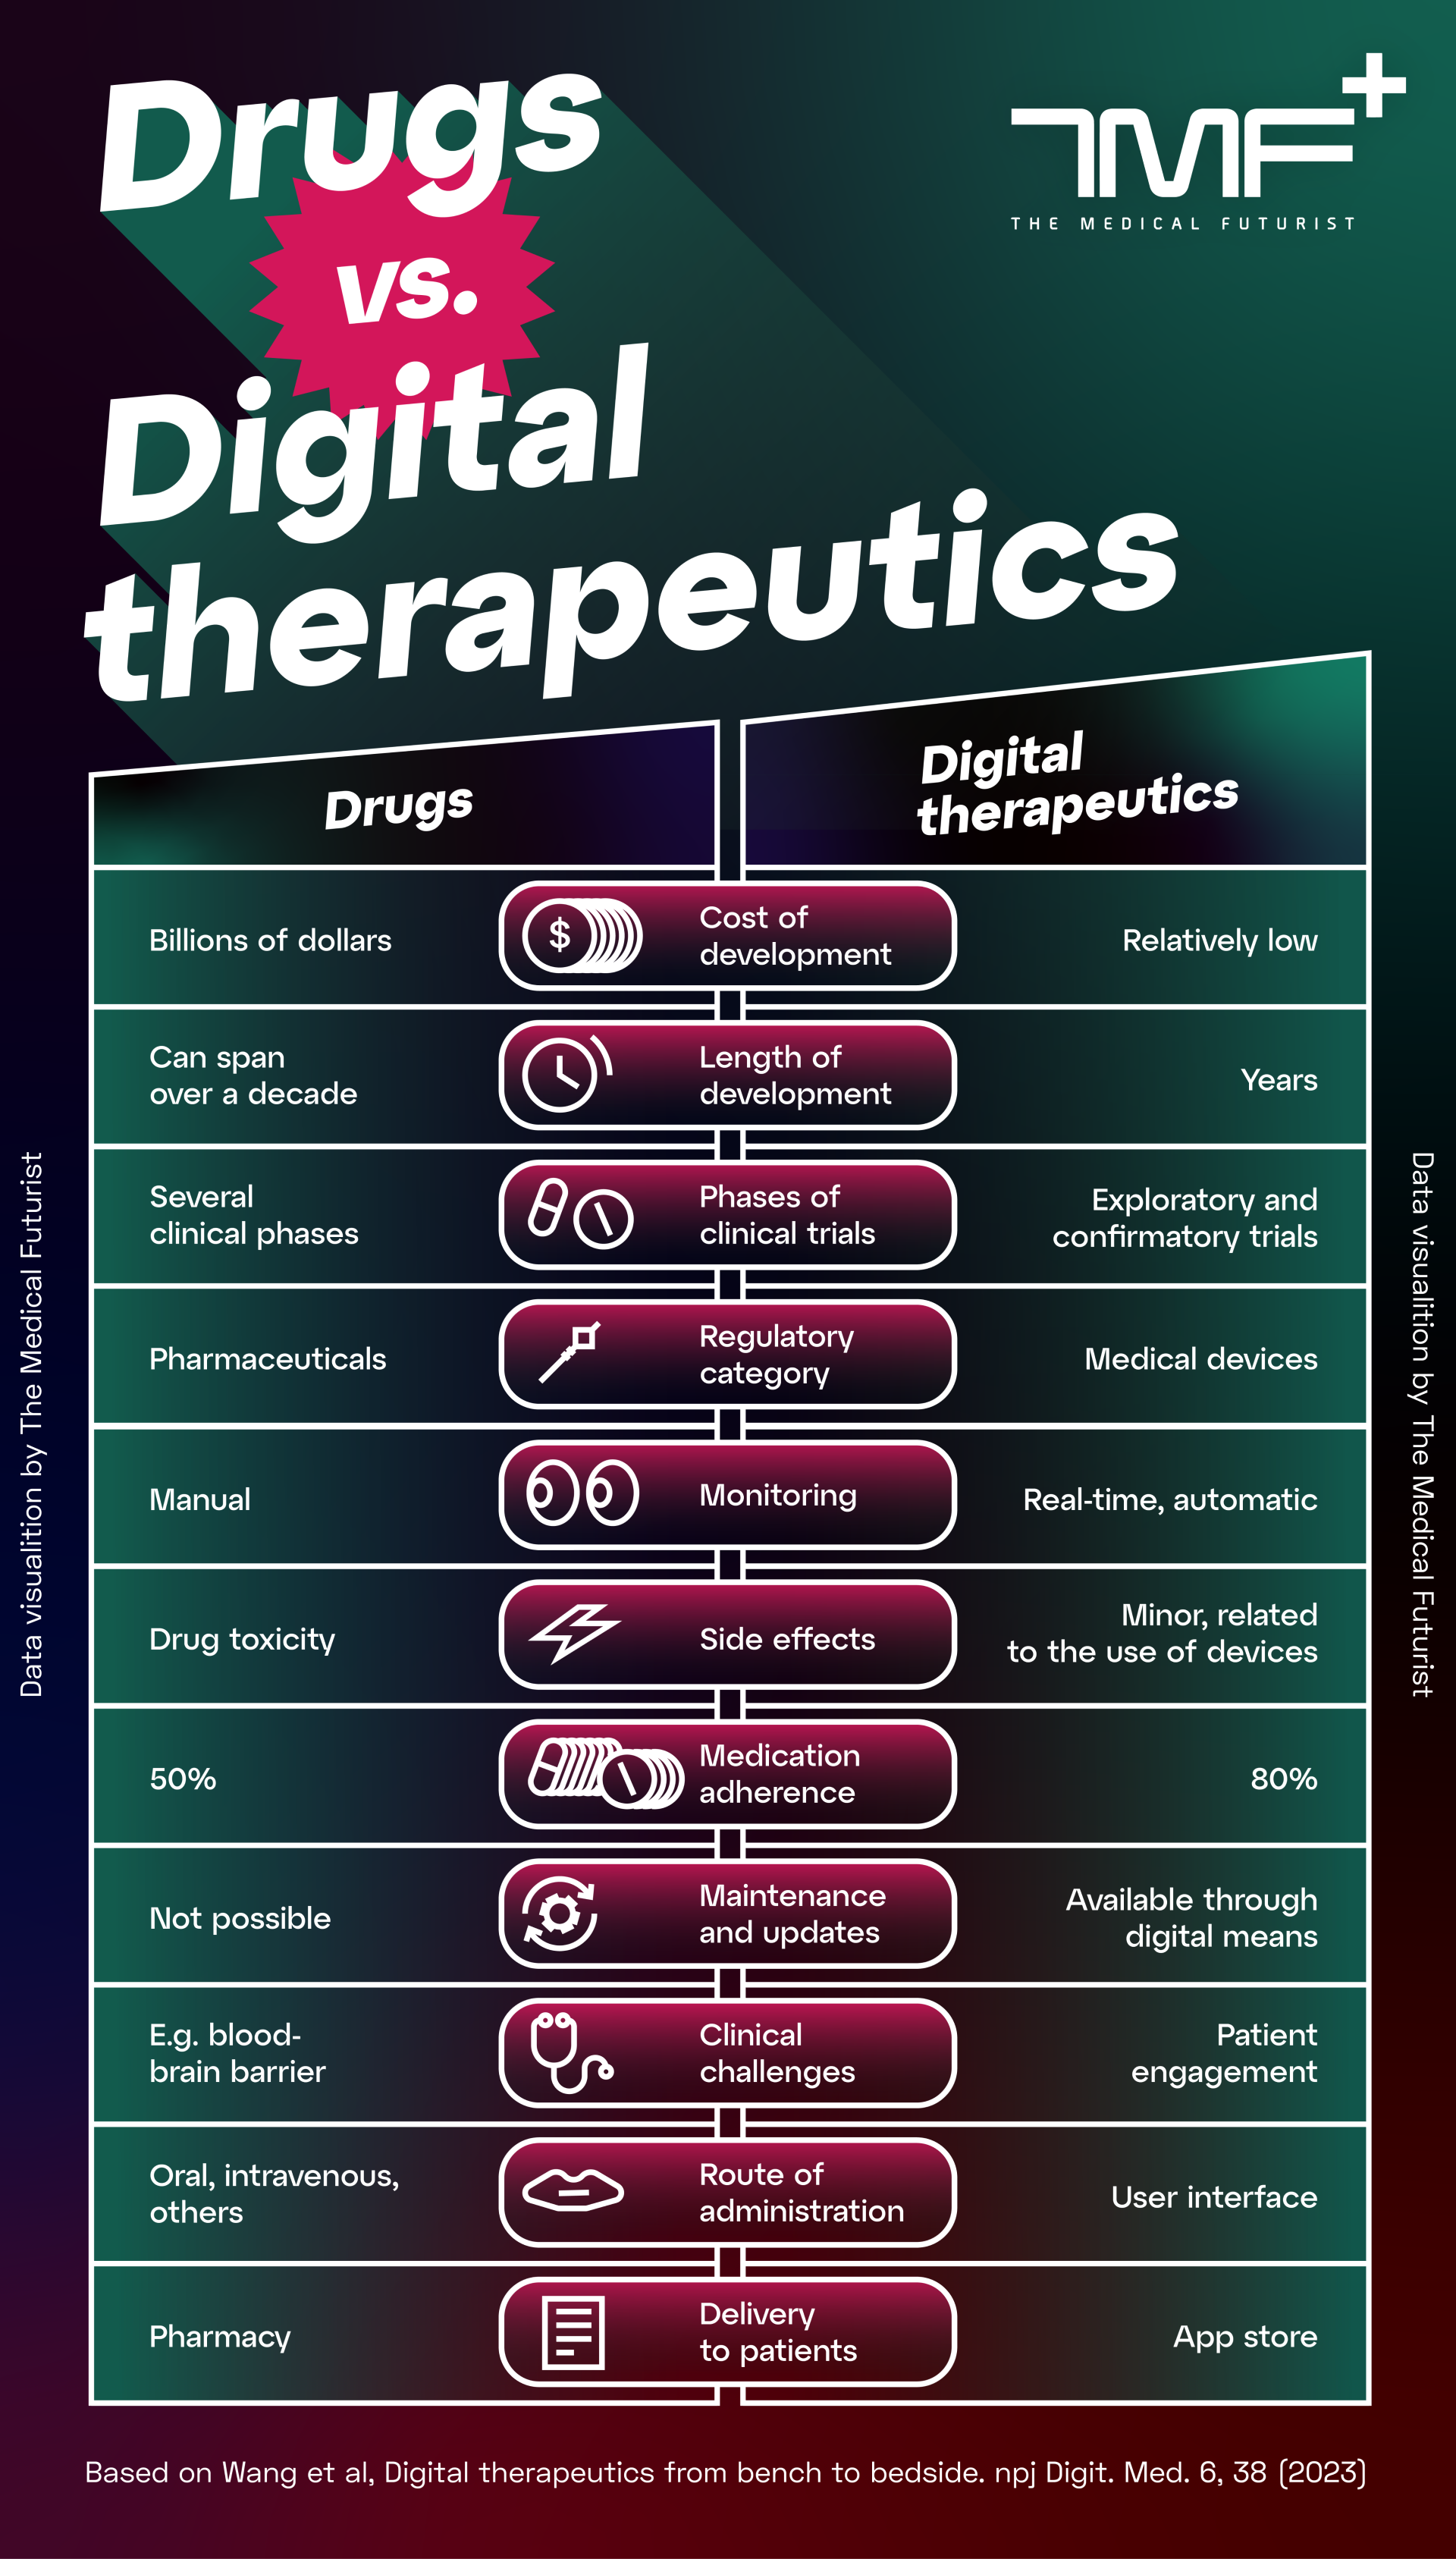 TMF Drugs Vs Digital Therapeutics